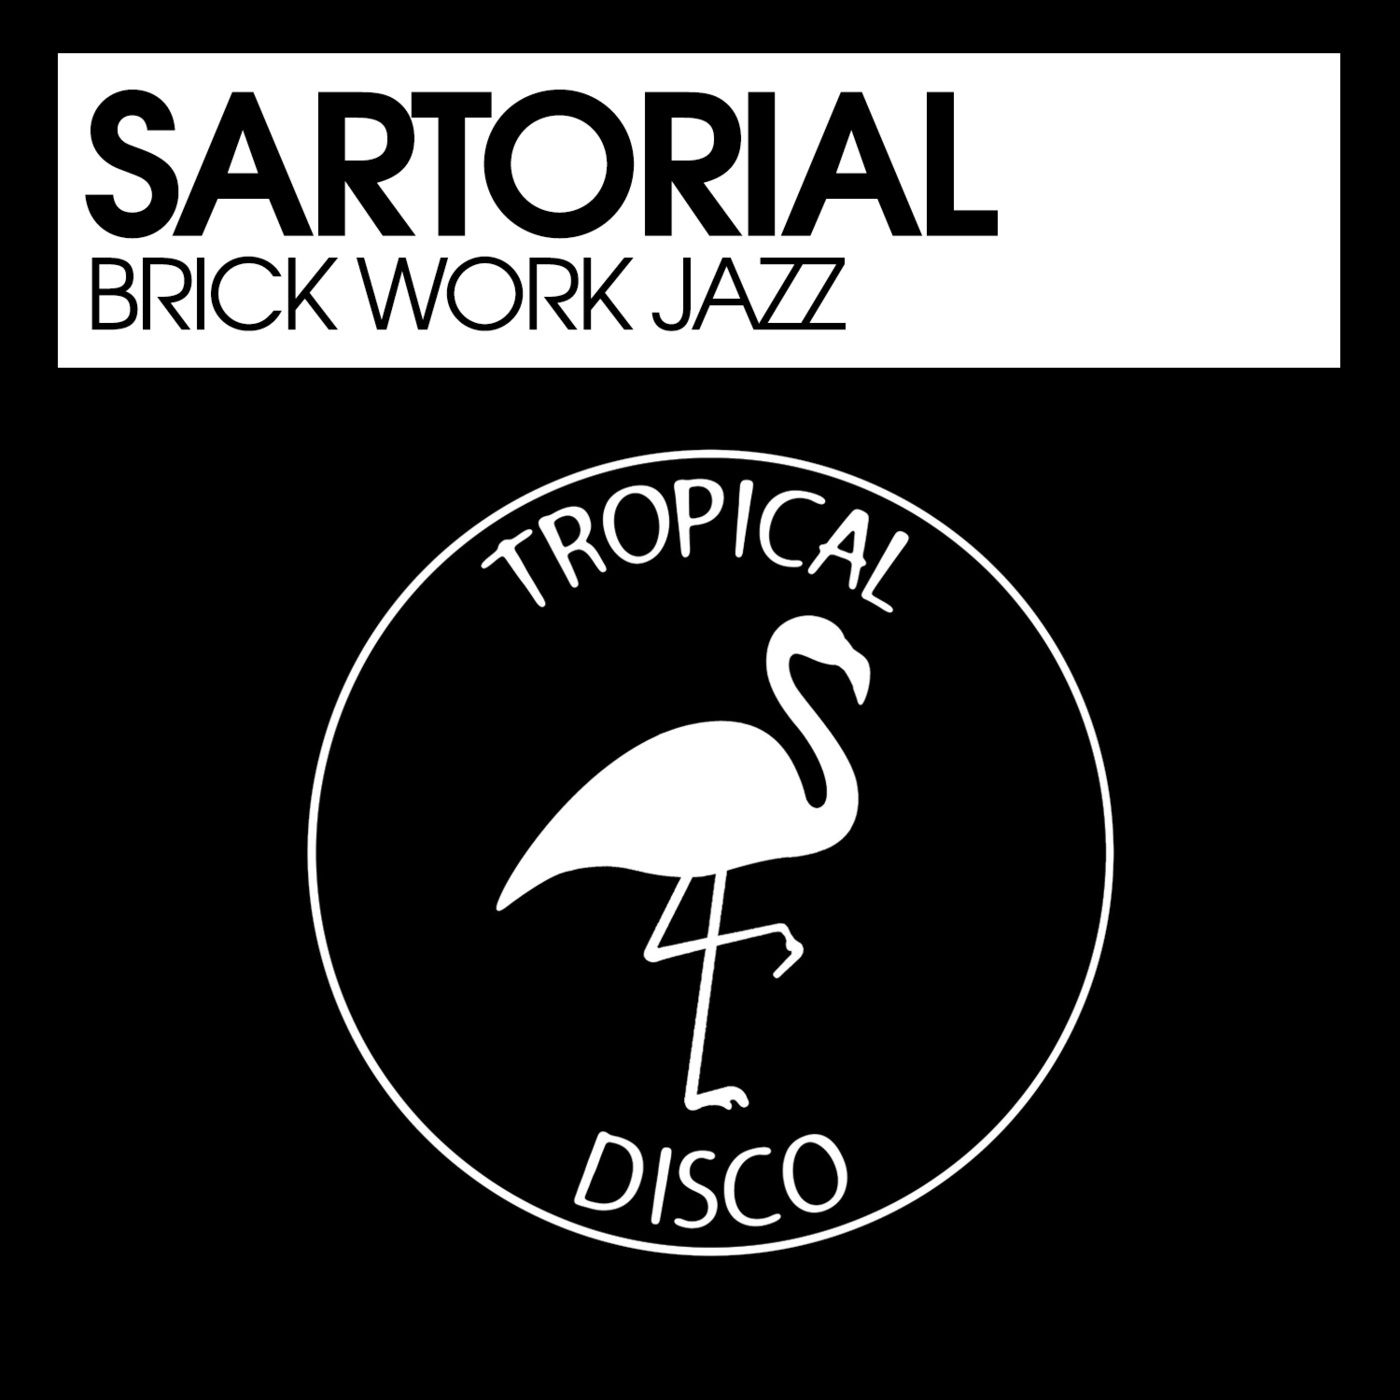 Sartorial - Brick Work Jazz / Tropical Disco Records